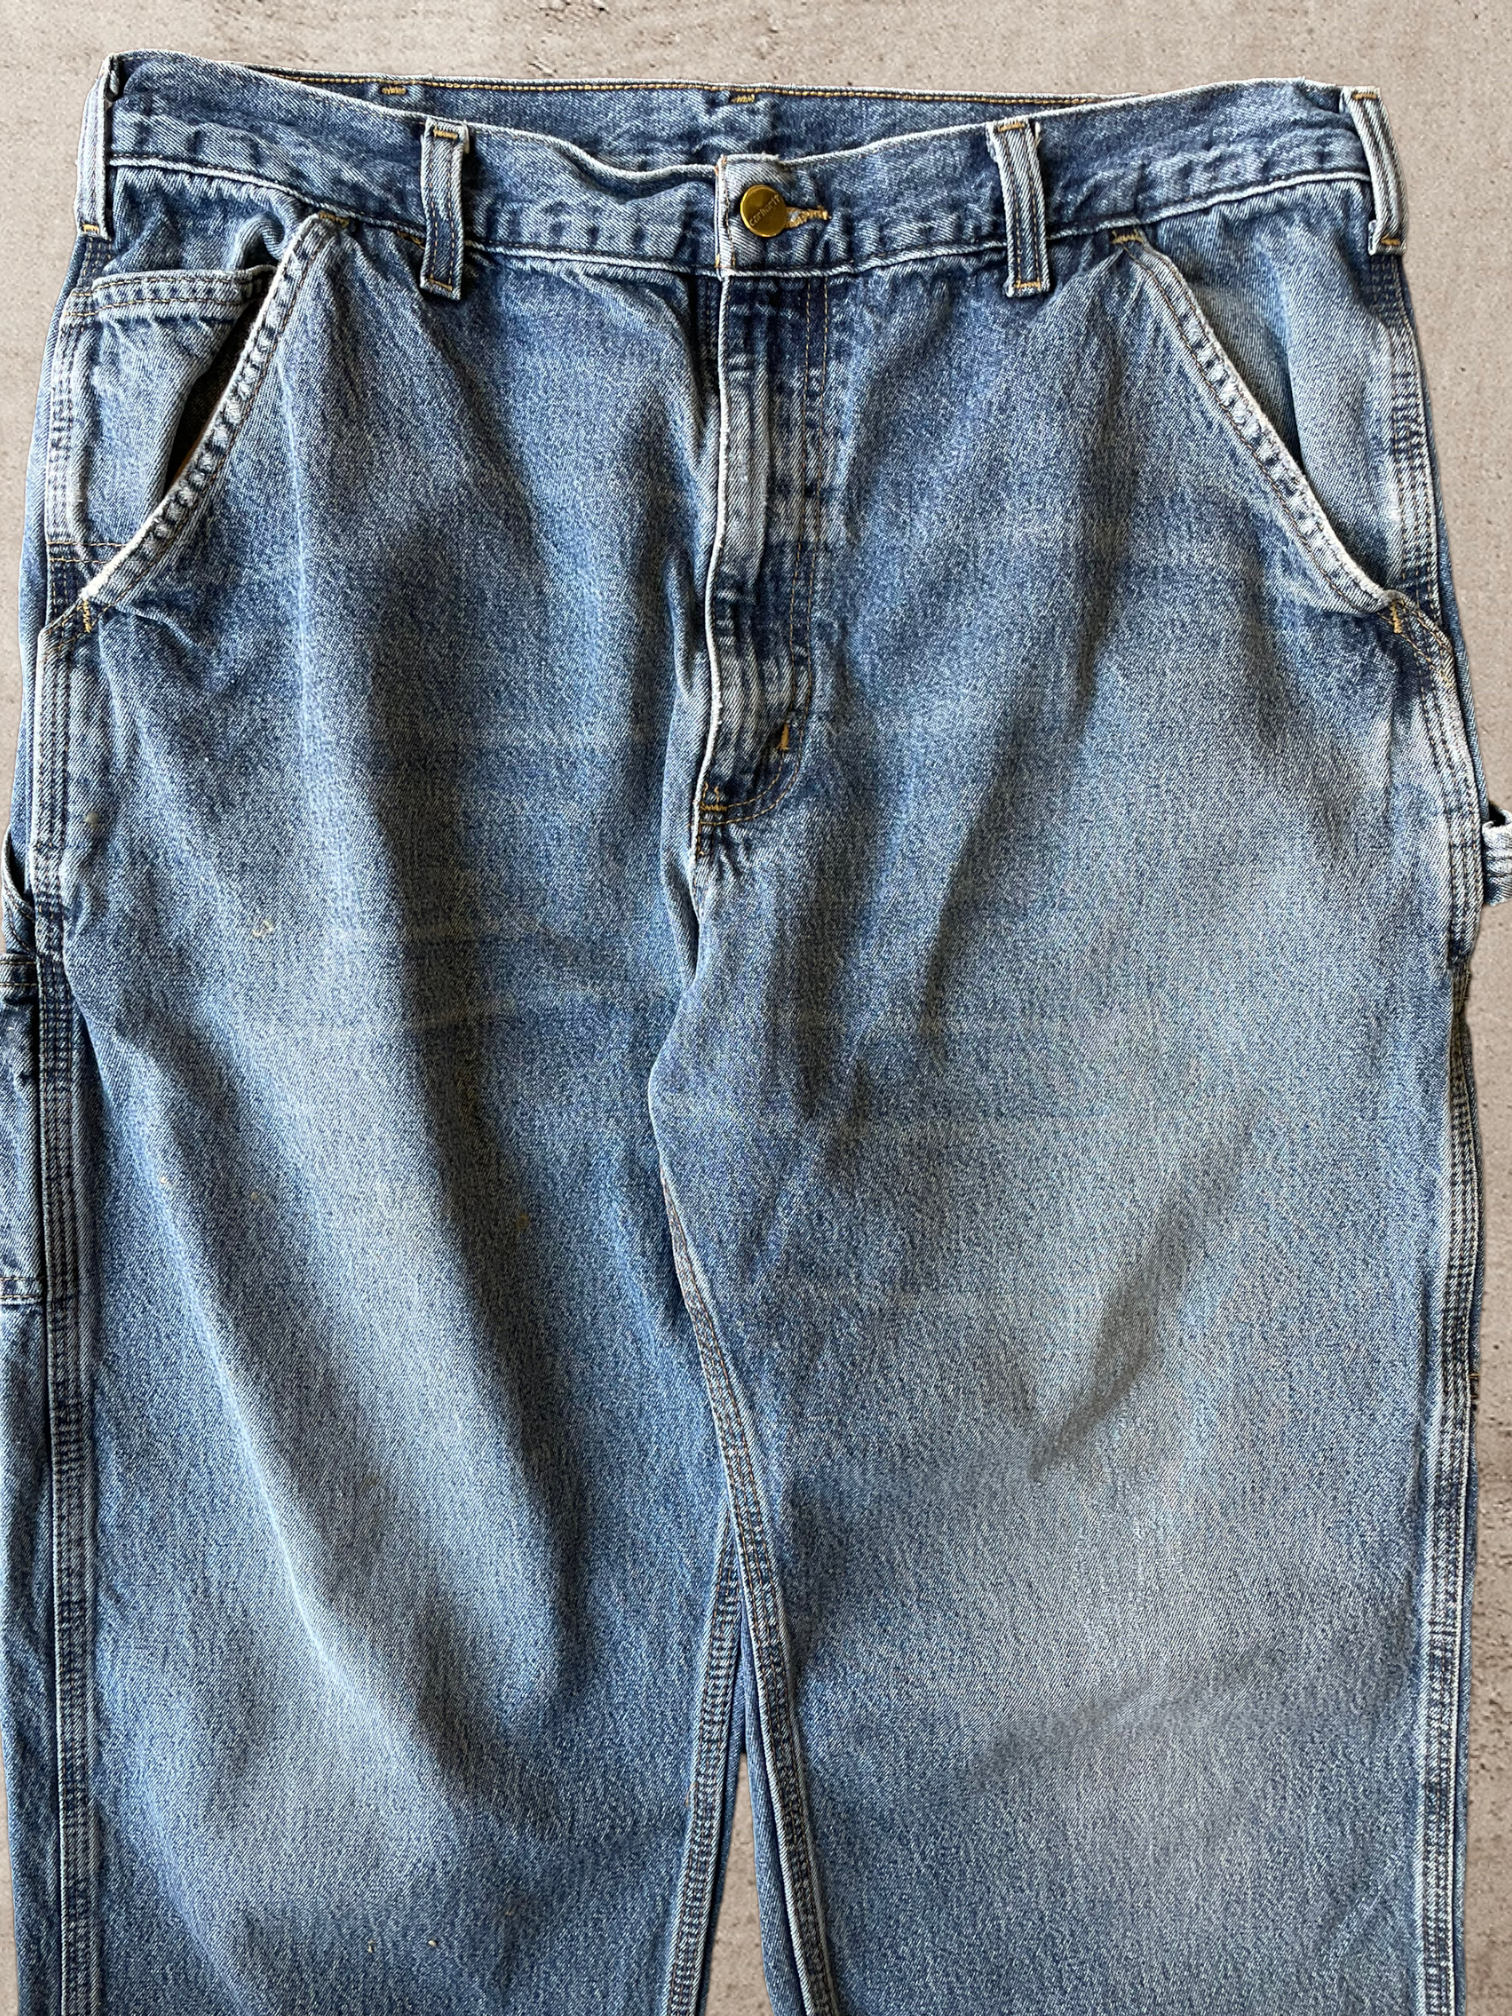 Vintage Carhartt Carpenter Jeans - 35x30